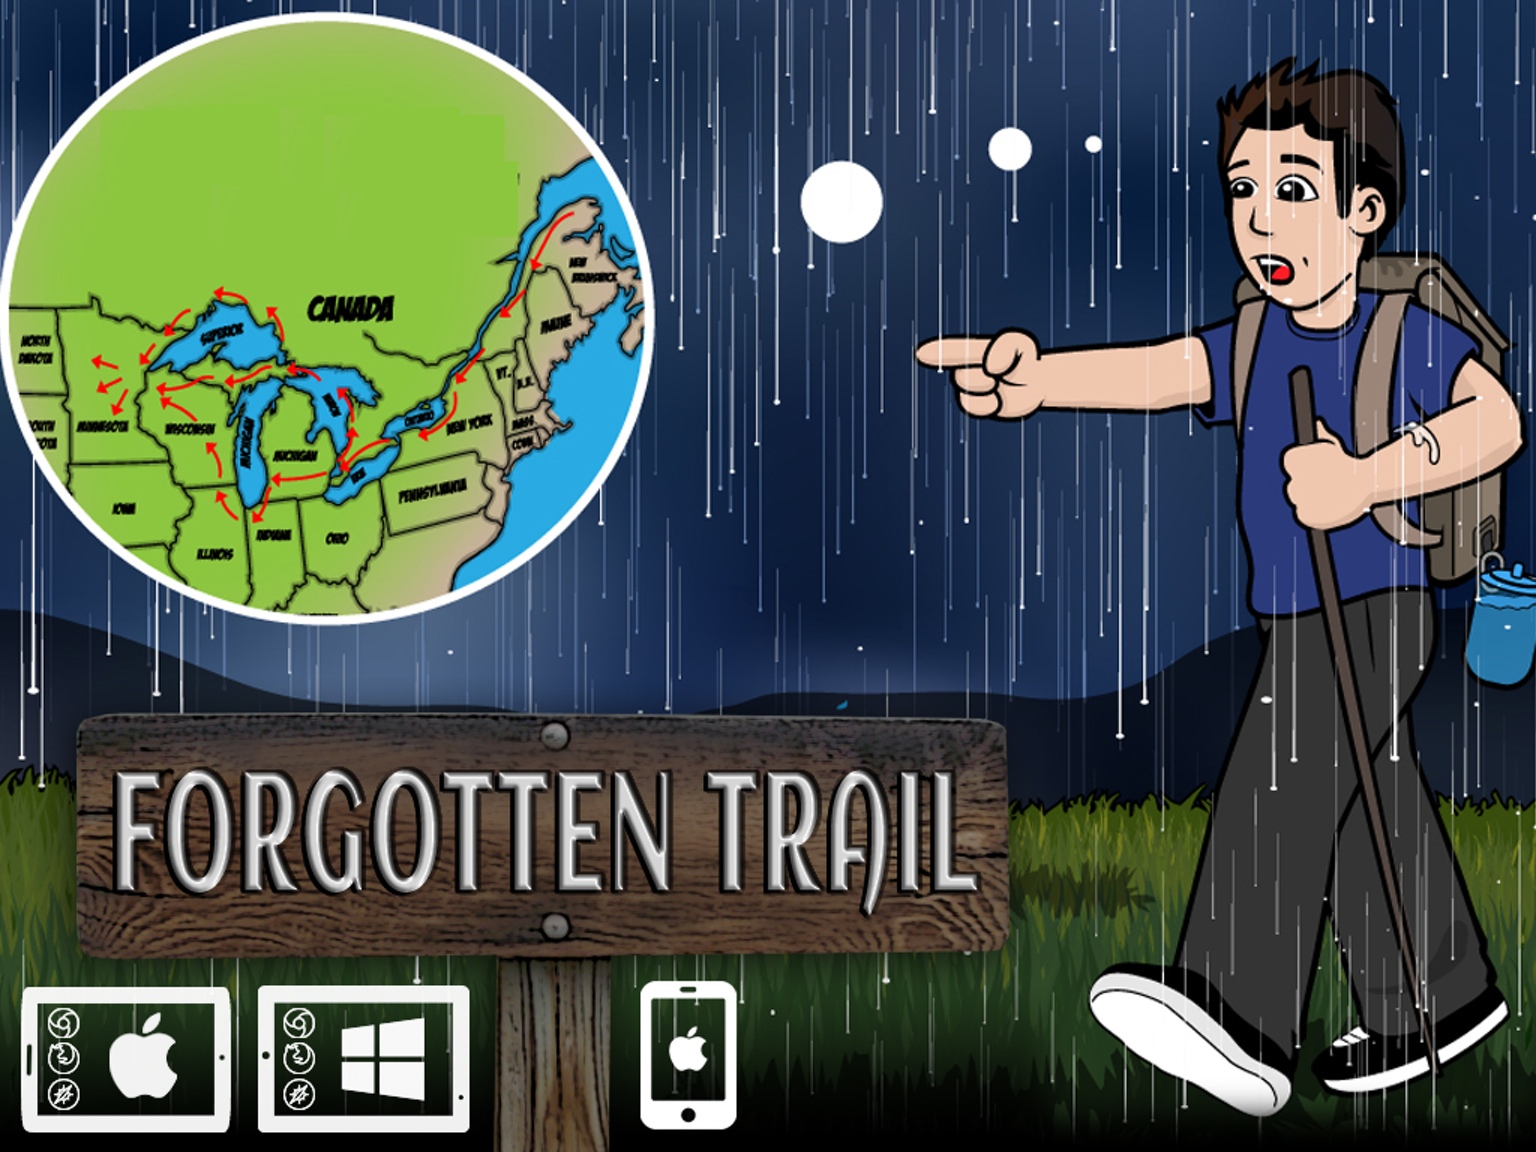 Forgotten Trail logo